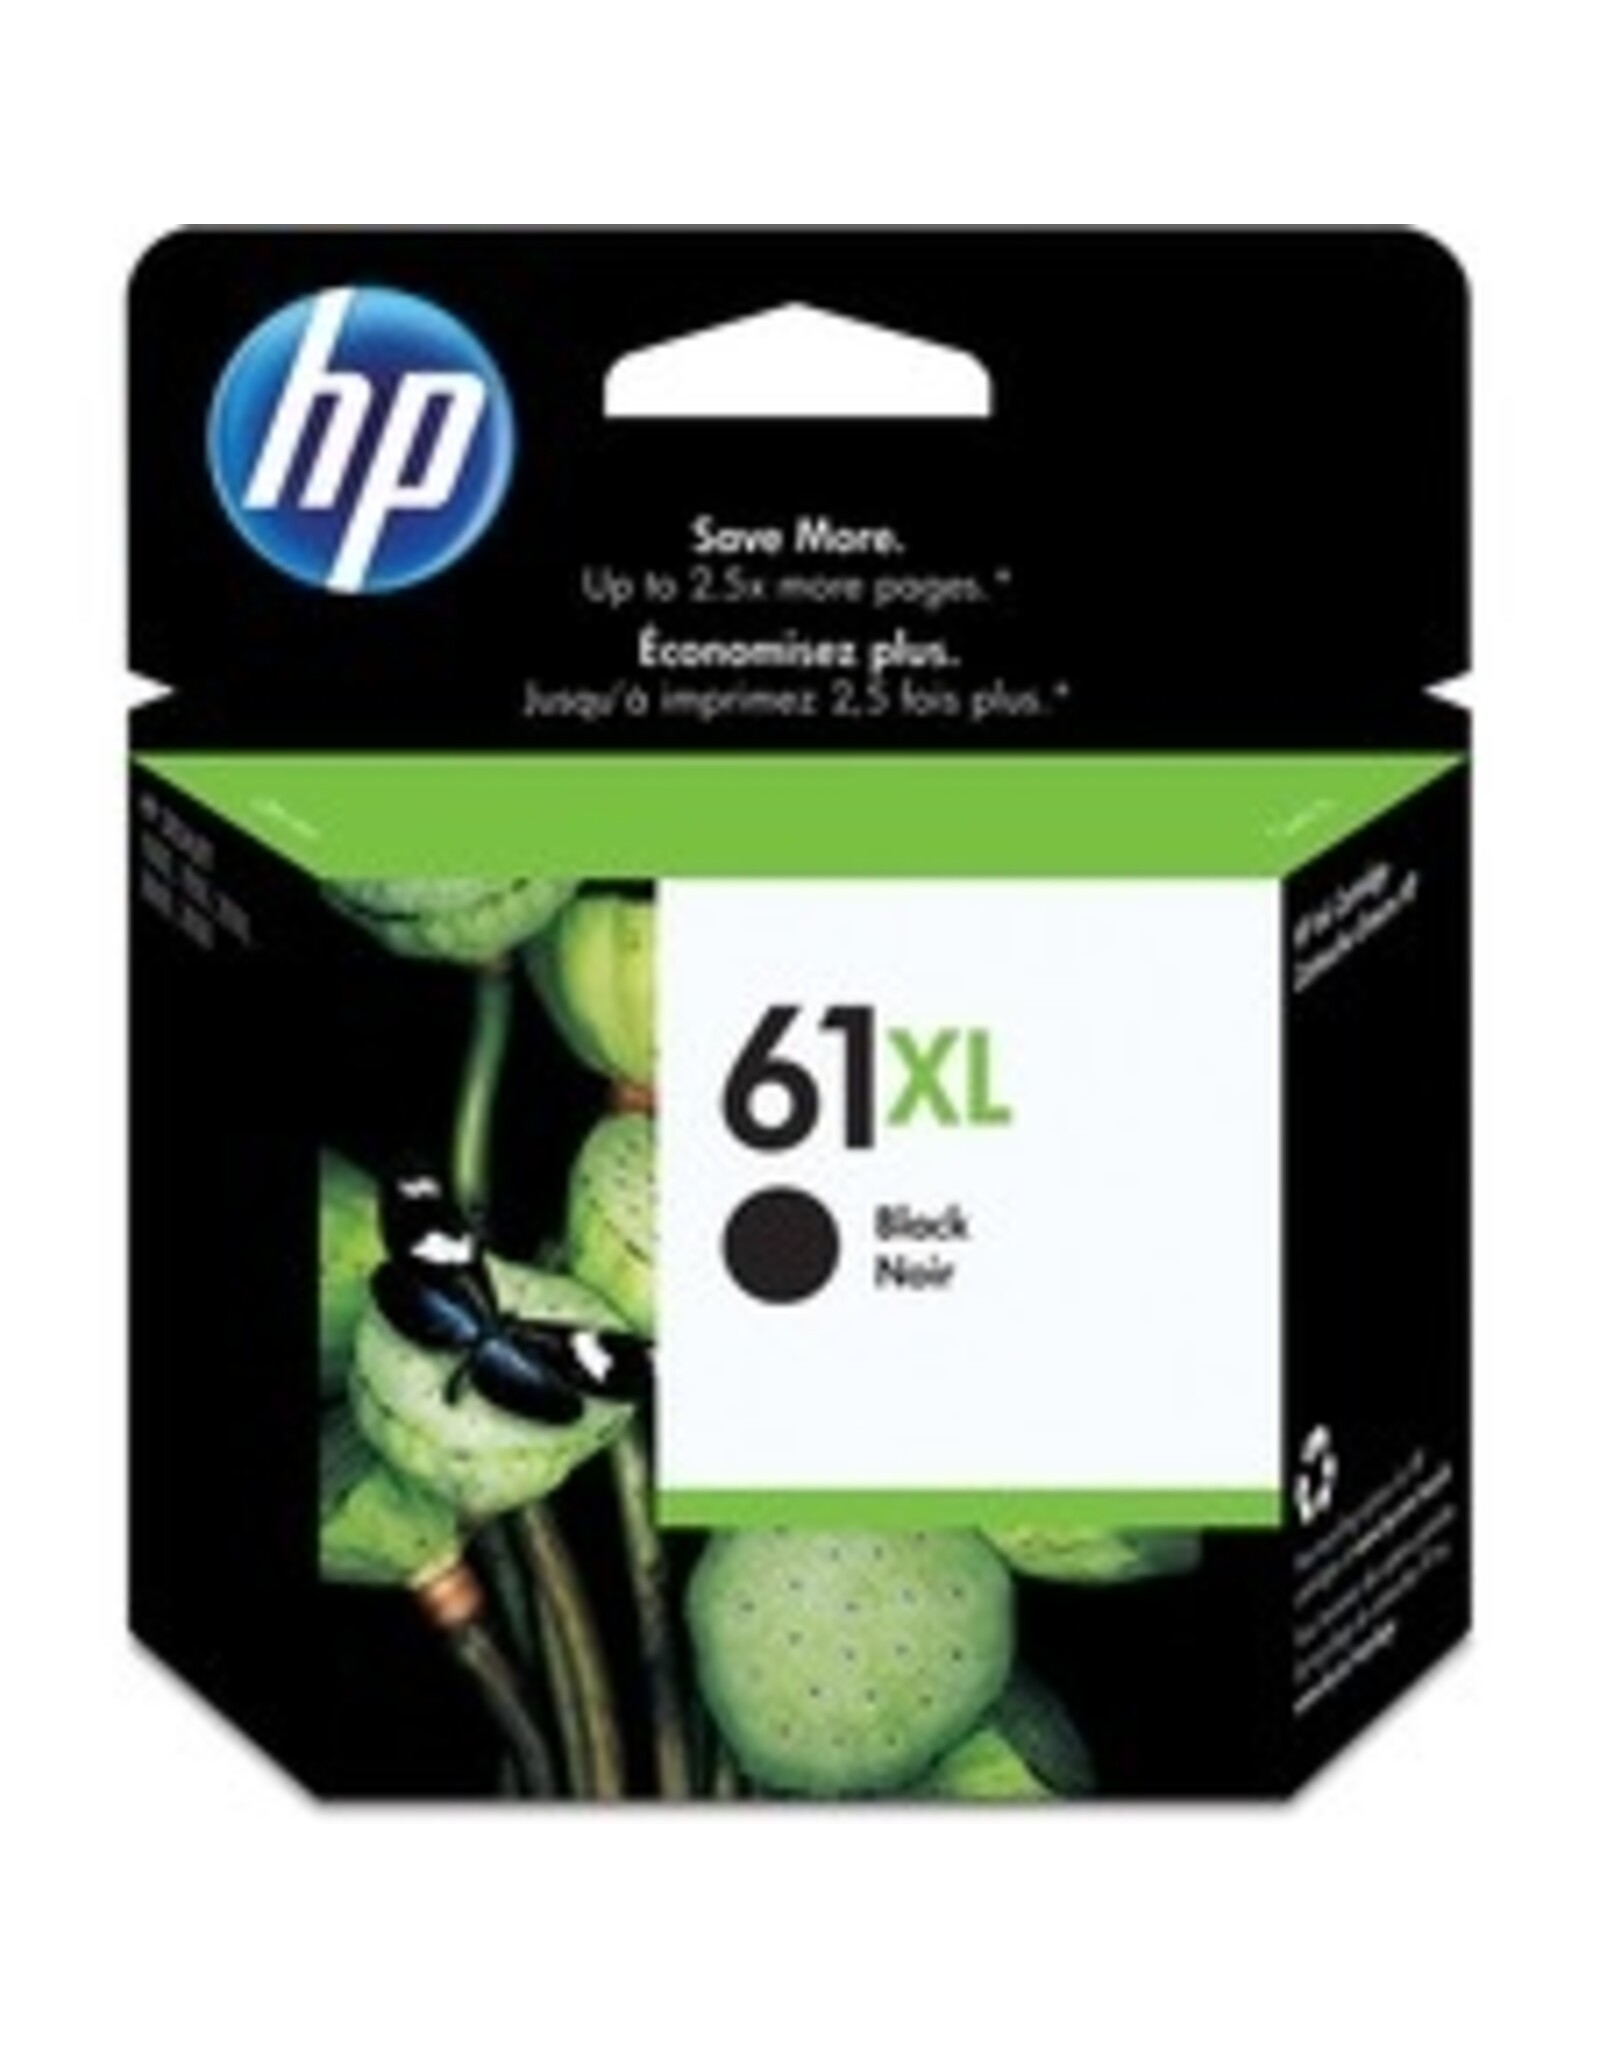 HP HP 61XL Black Original Ink Cartridge - Single Pack